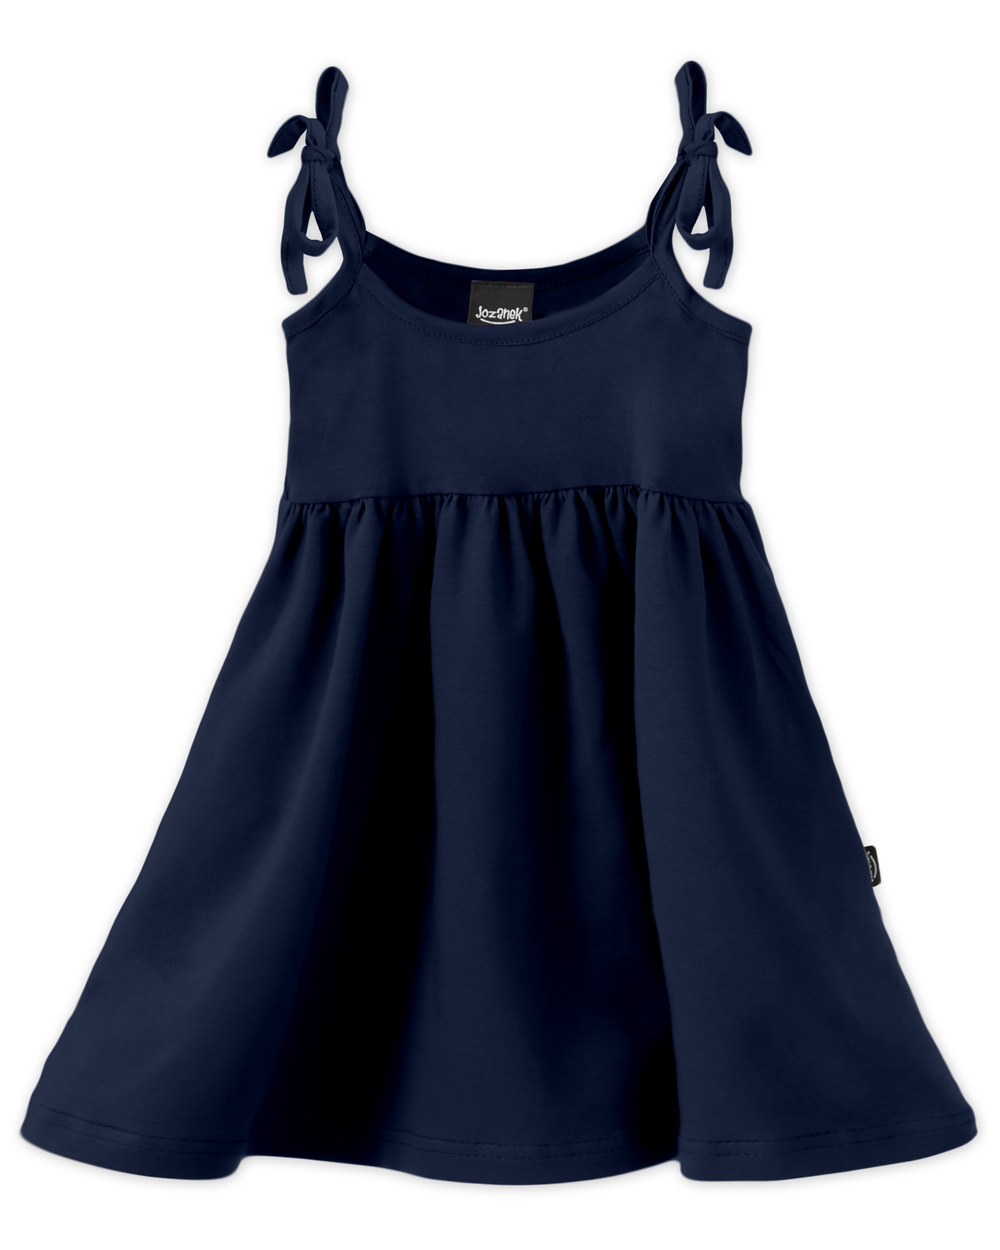 Children’s dresses, tying on shoulders, dark blue